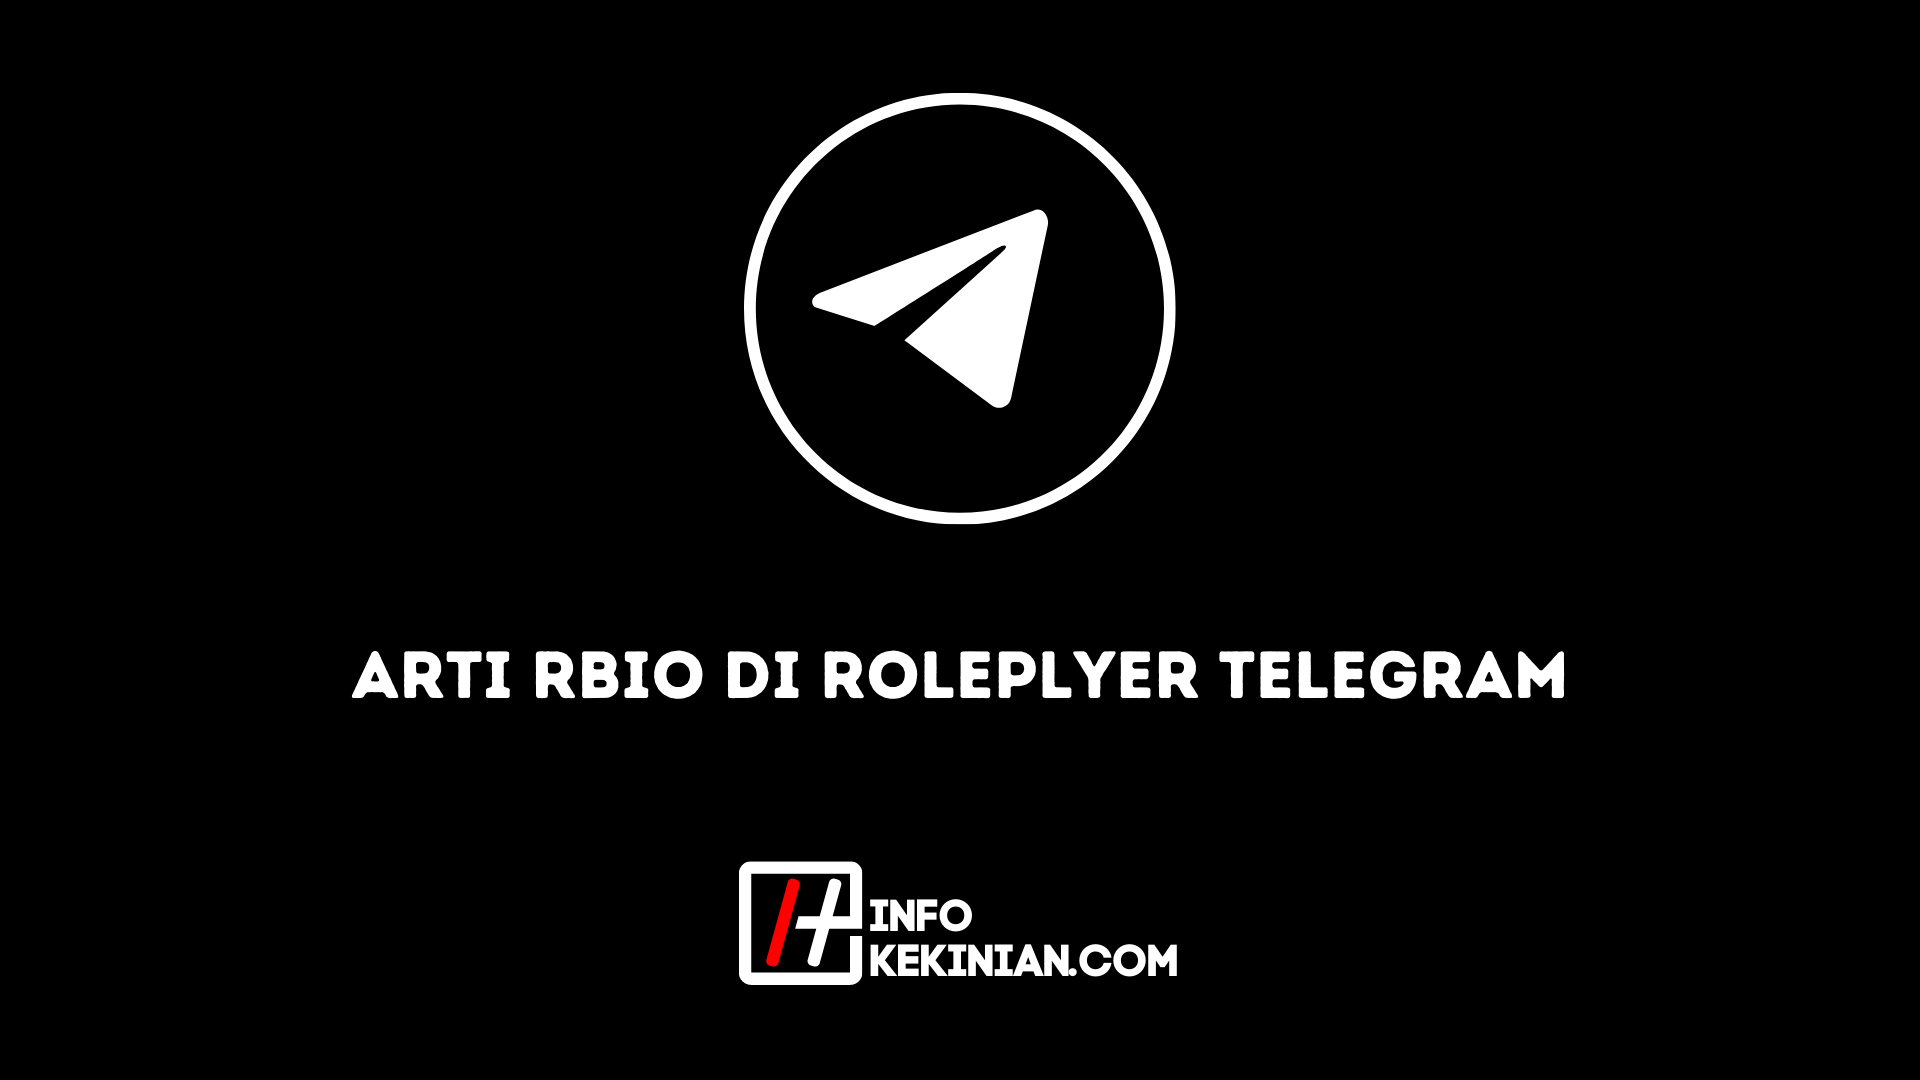 Arti Rbio di Roleplyer Telegram